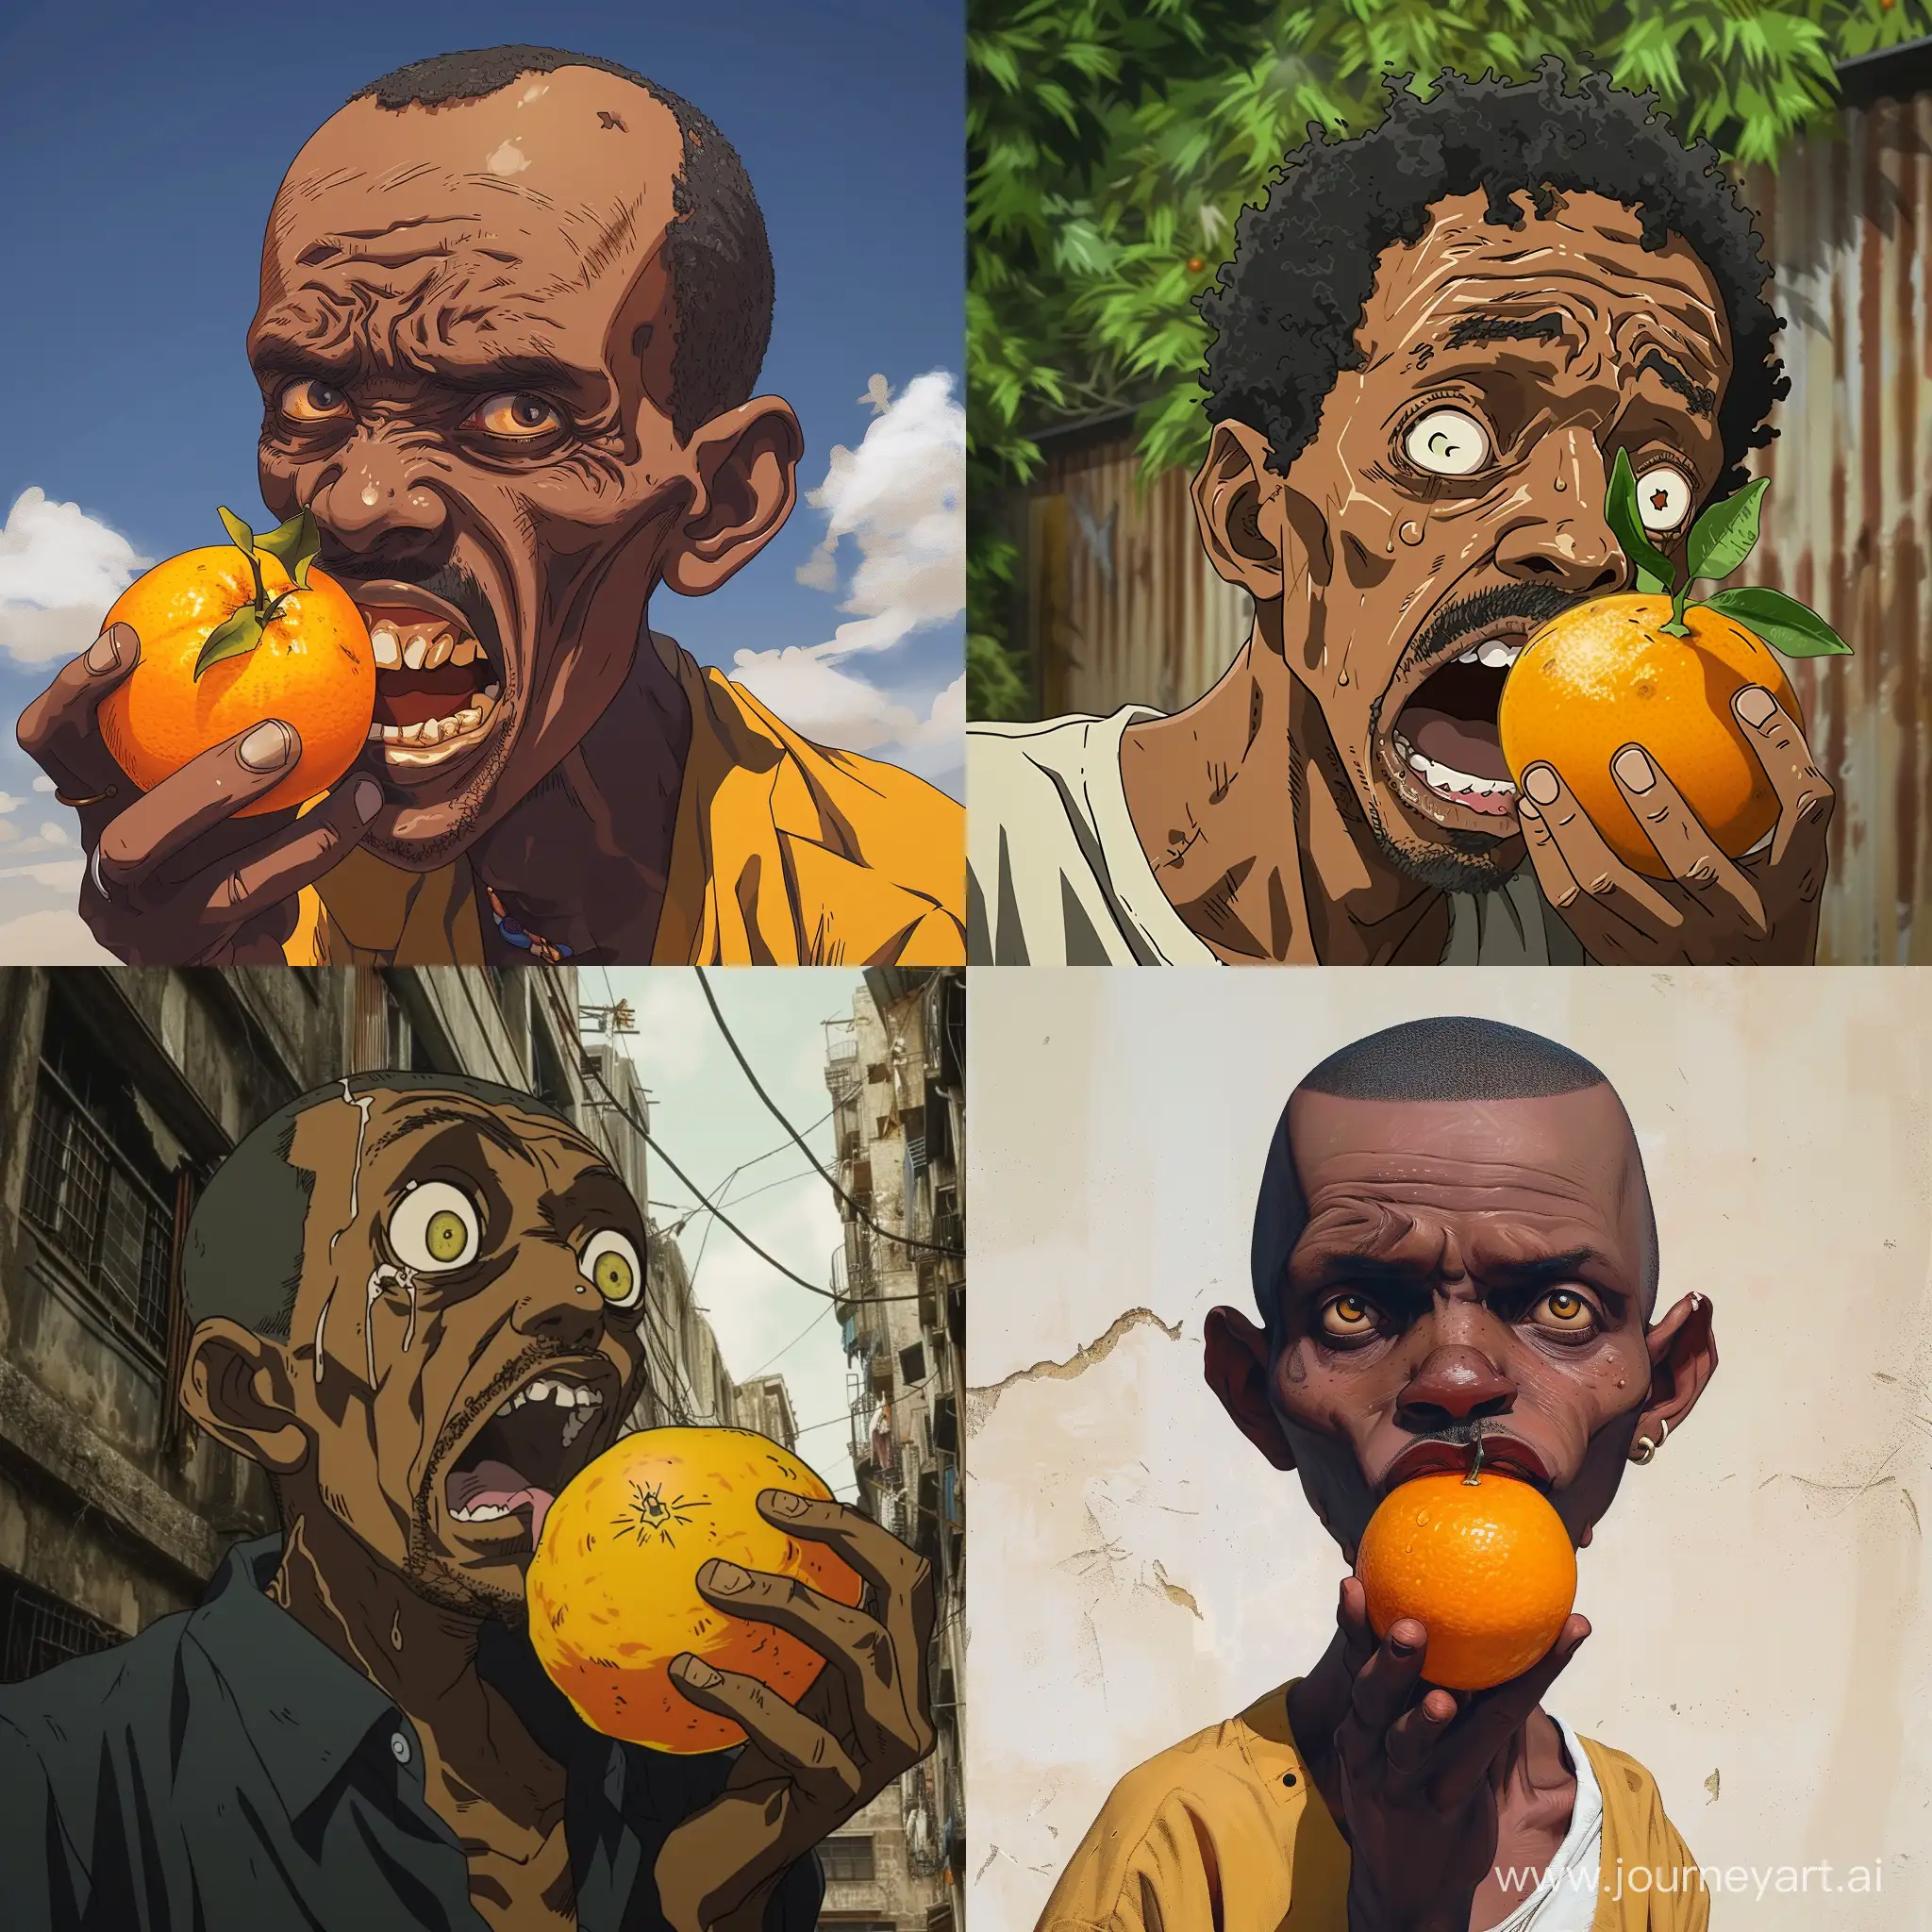 Cheerful-Somali-Man-Enjoying-an-Orange-with-a-Comically-Large-Forehead-Anime-Style